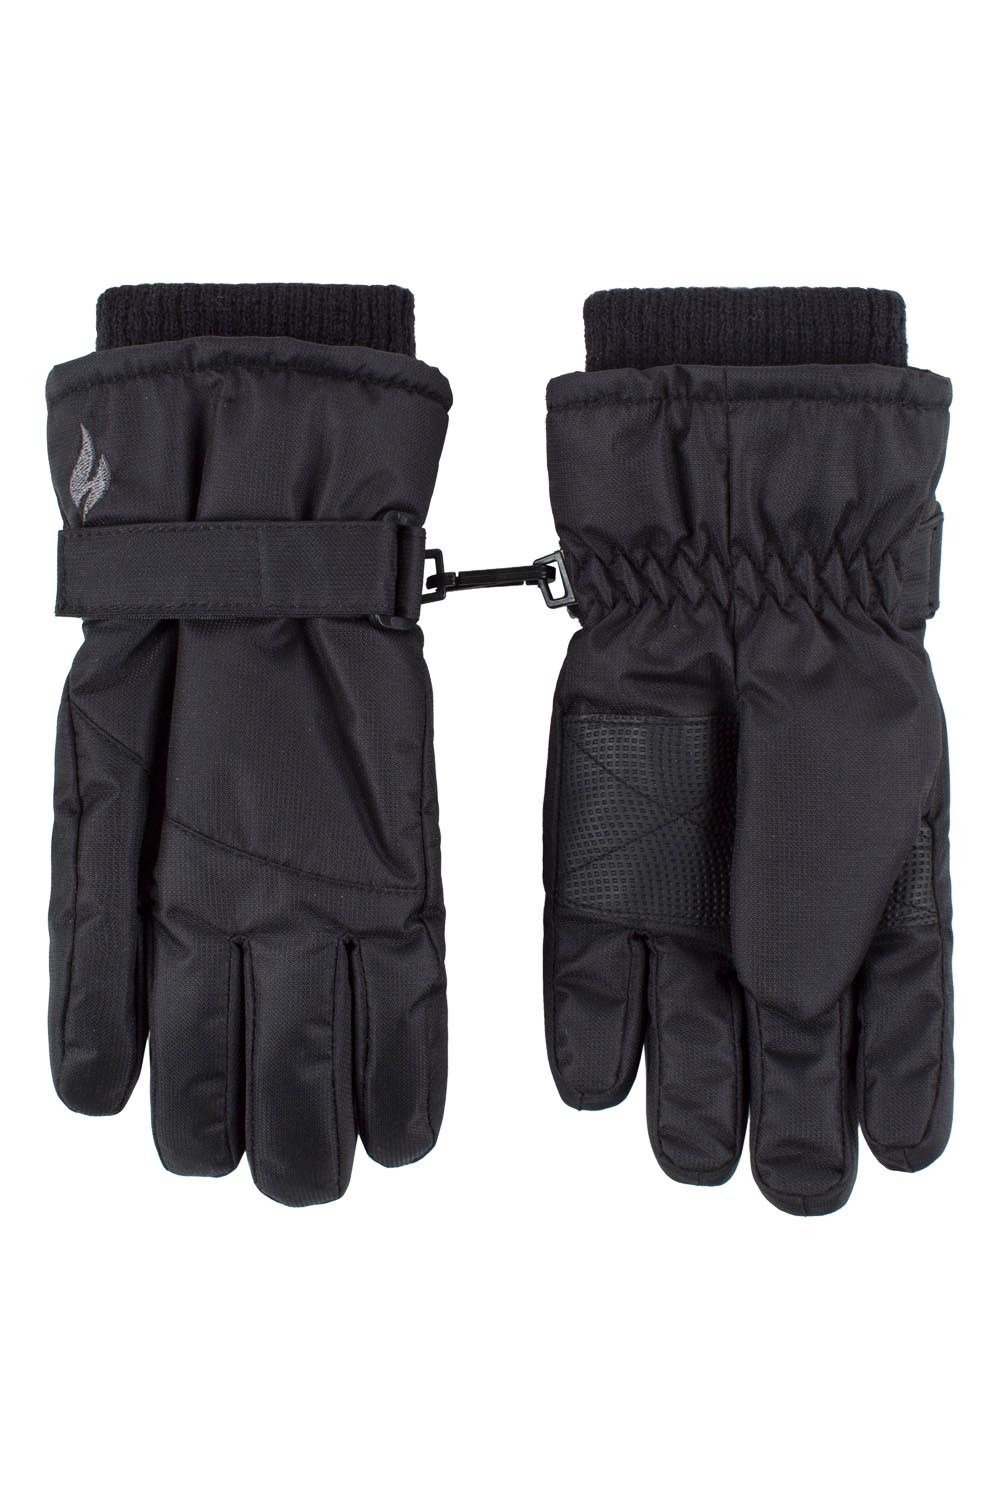 Boys Winter Fleece Lined Thermal Ski Snow Gloves -